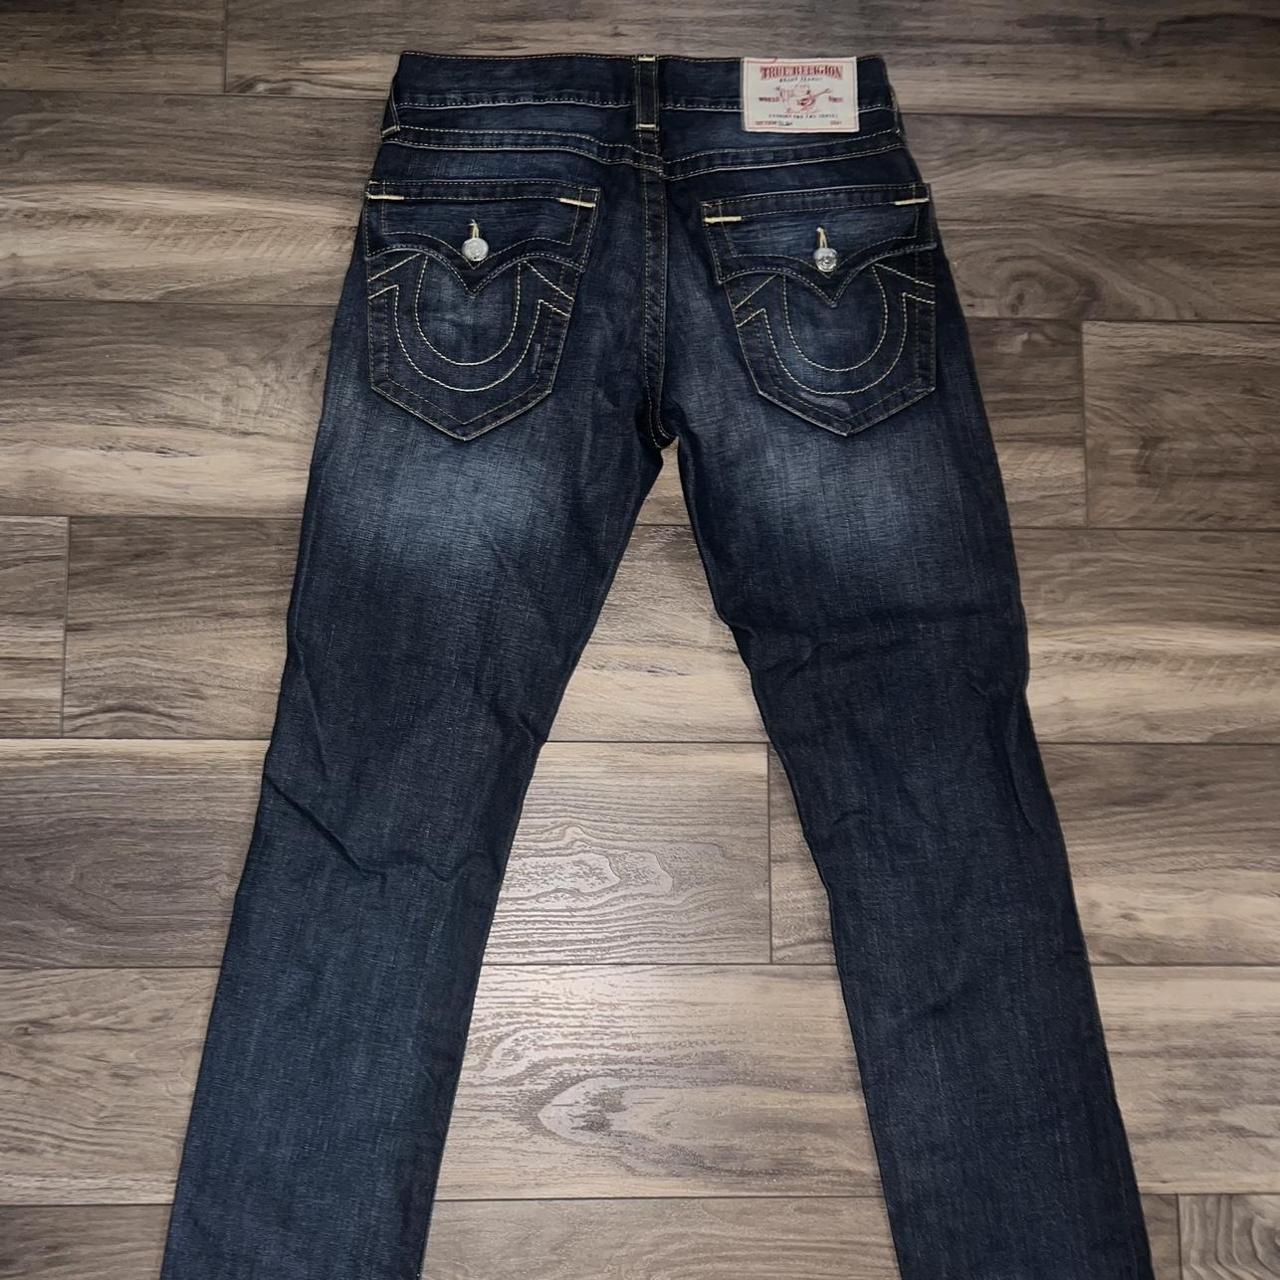 True religion Slim jeans Size 31 Great condition... - Depop